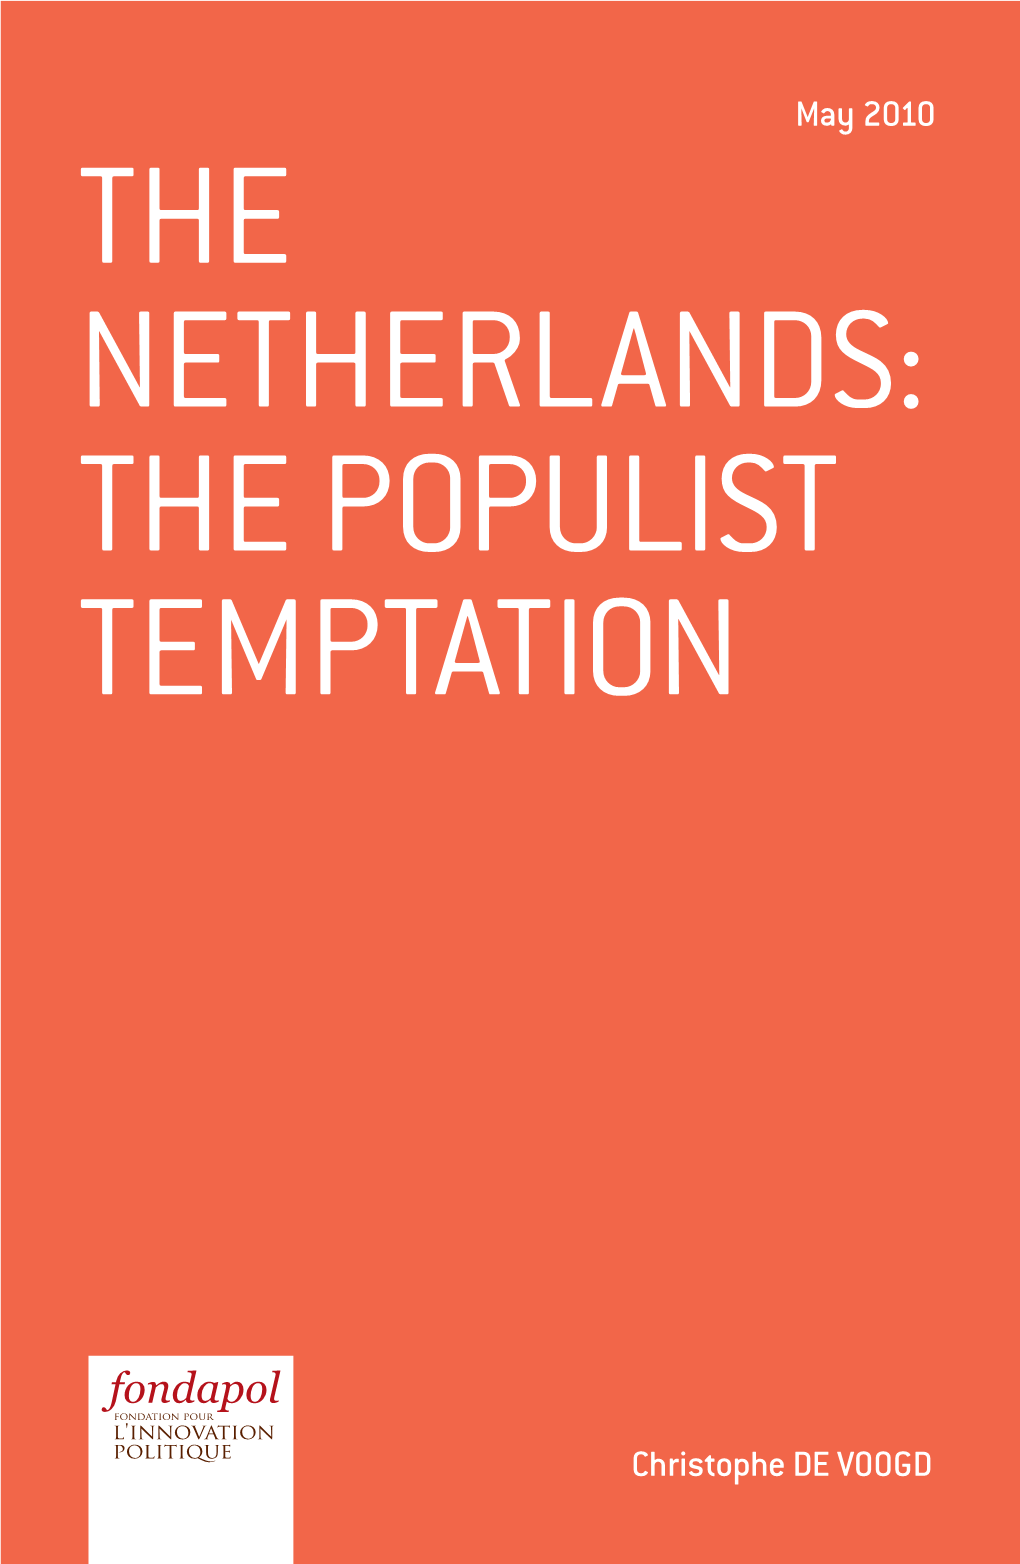 The Populist Temptation